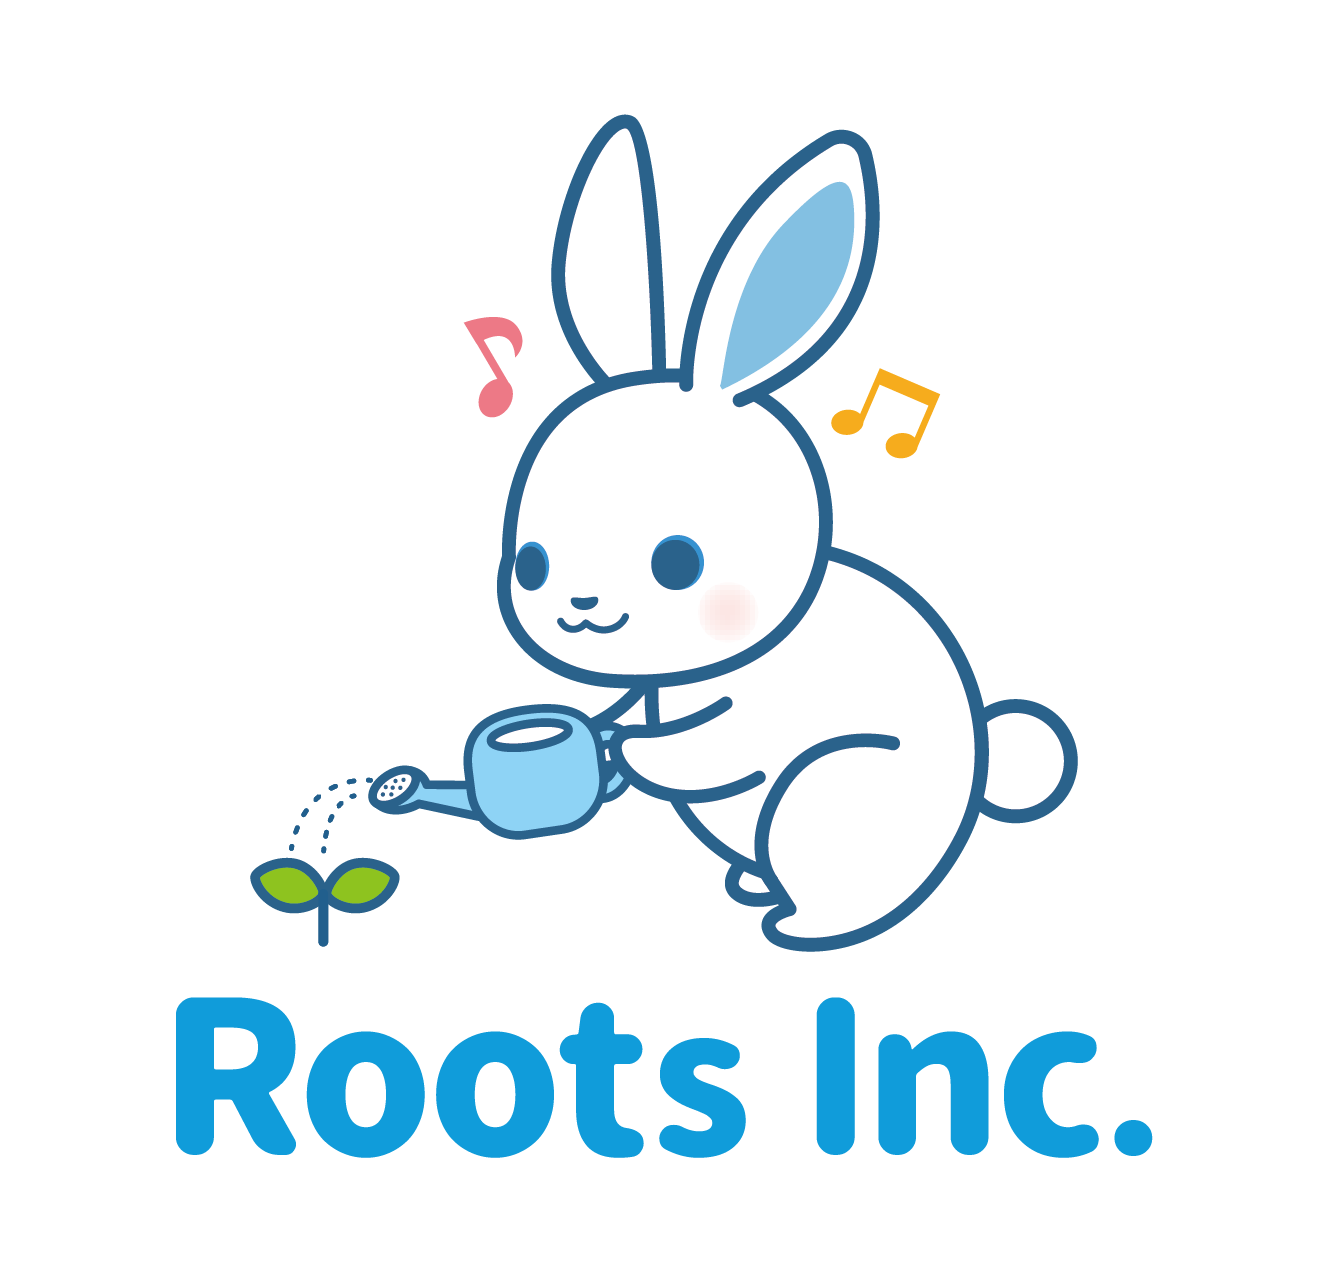 Roots Inc.の支援サービス